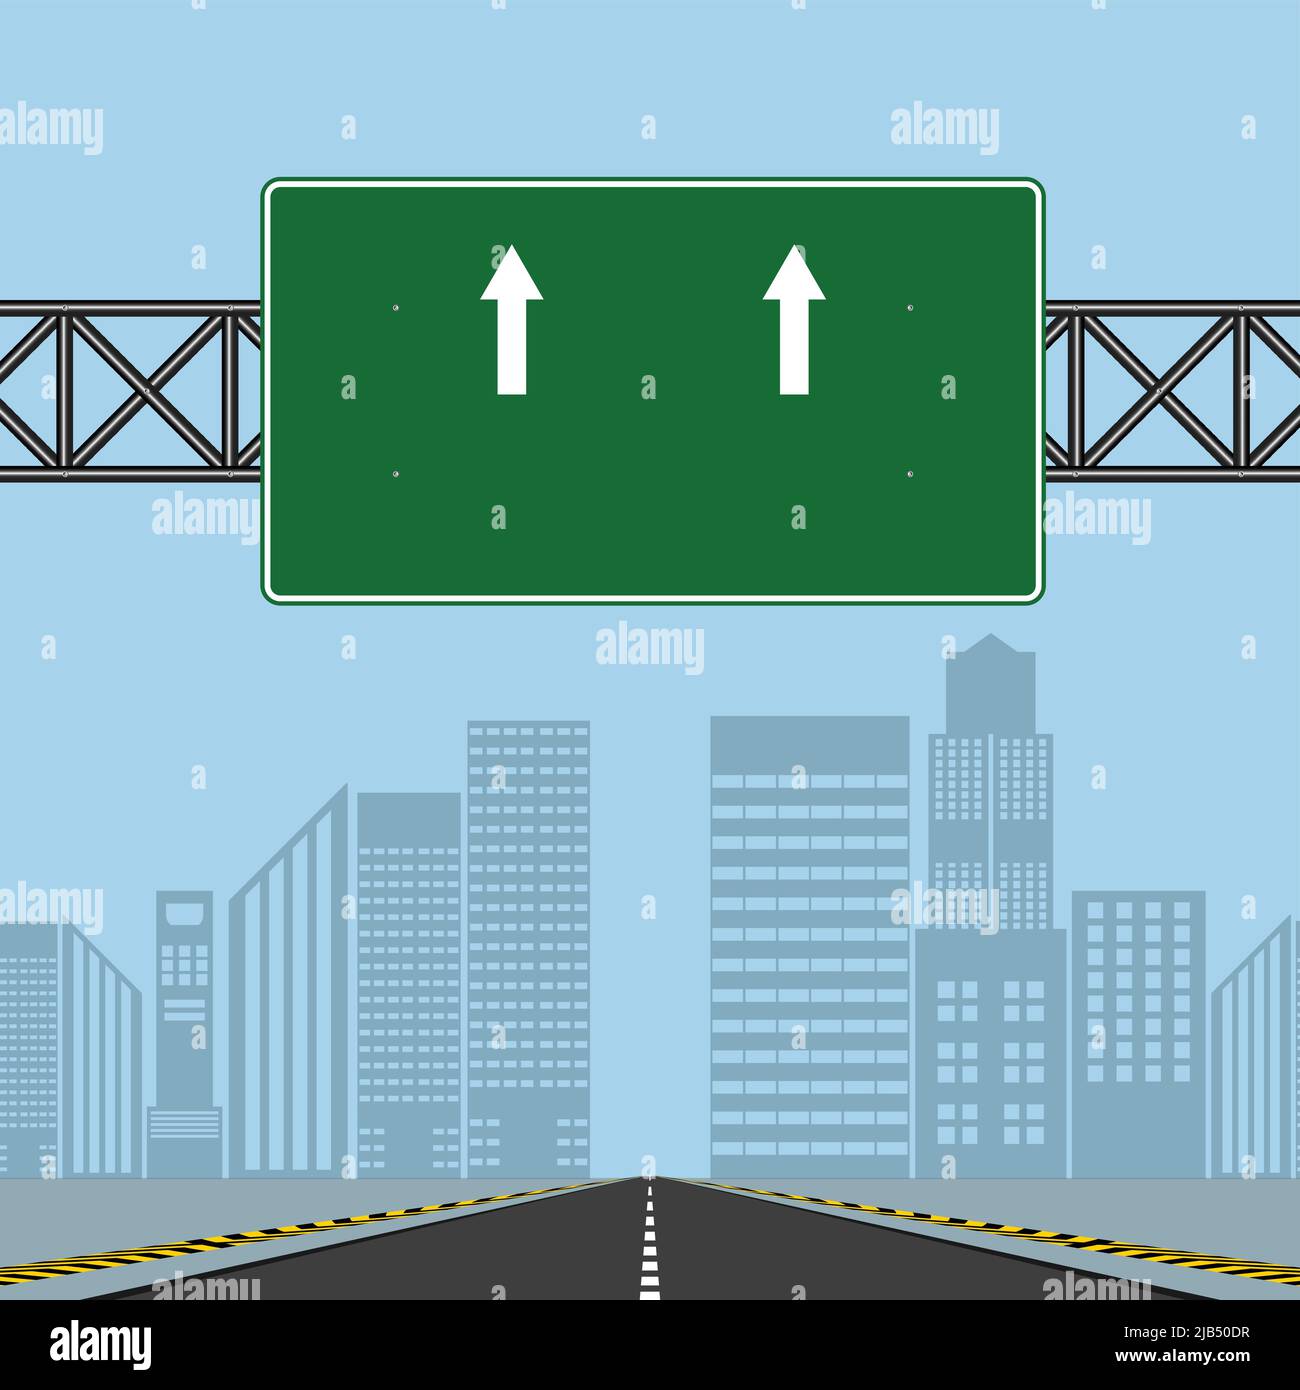 Road highway signs,Green board on road,Vector illustration Stock Vector